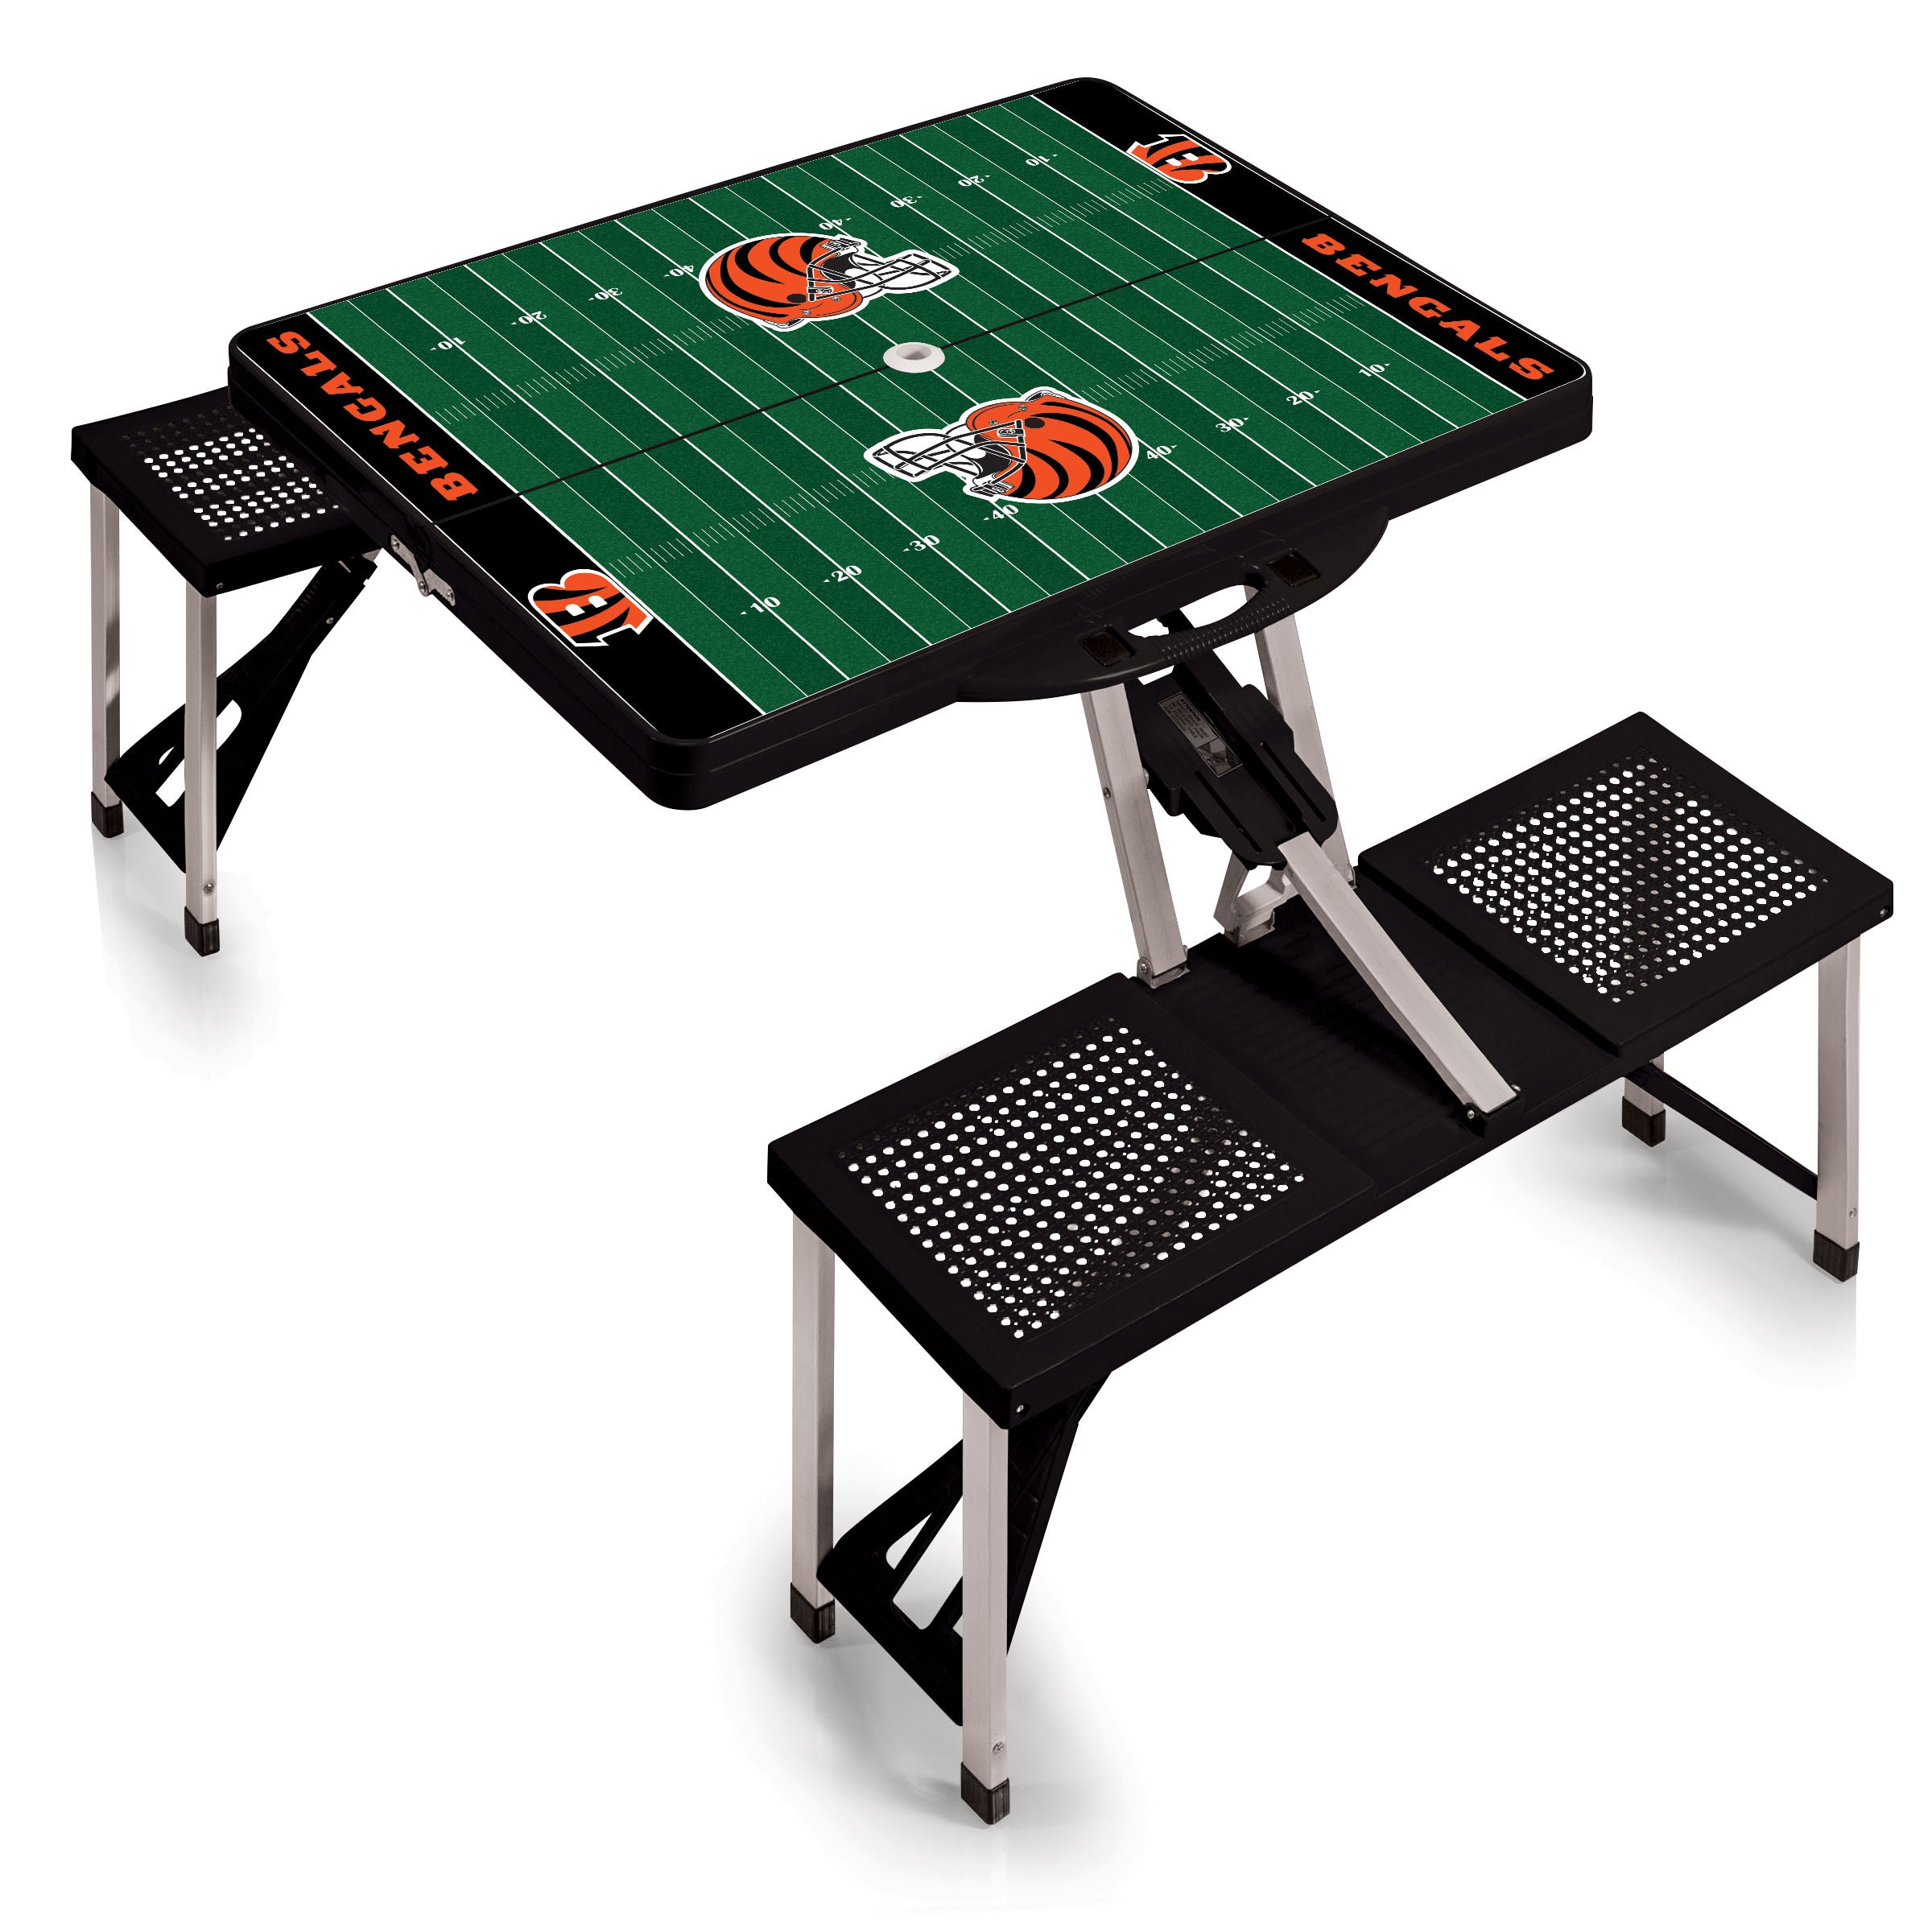 Cincinnati Bengals - Picnic Table Portable Folding Table with Seats and Umbrella